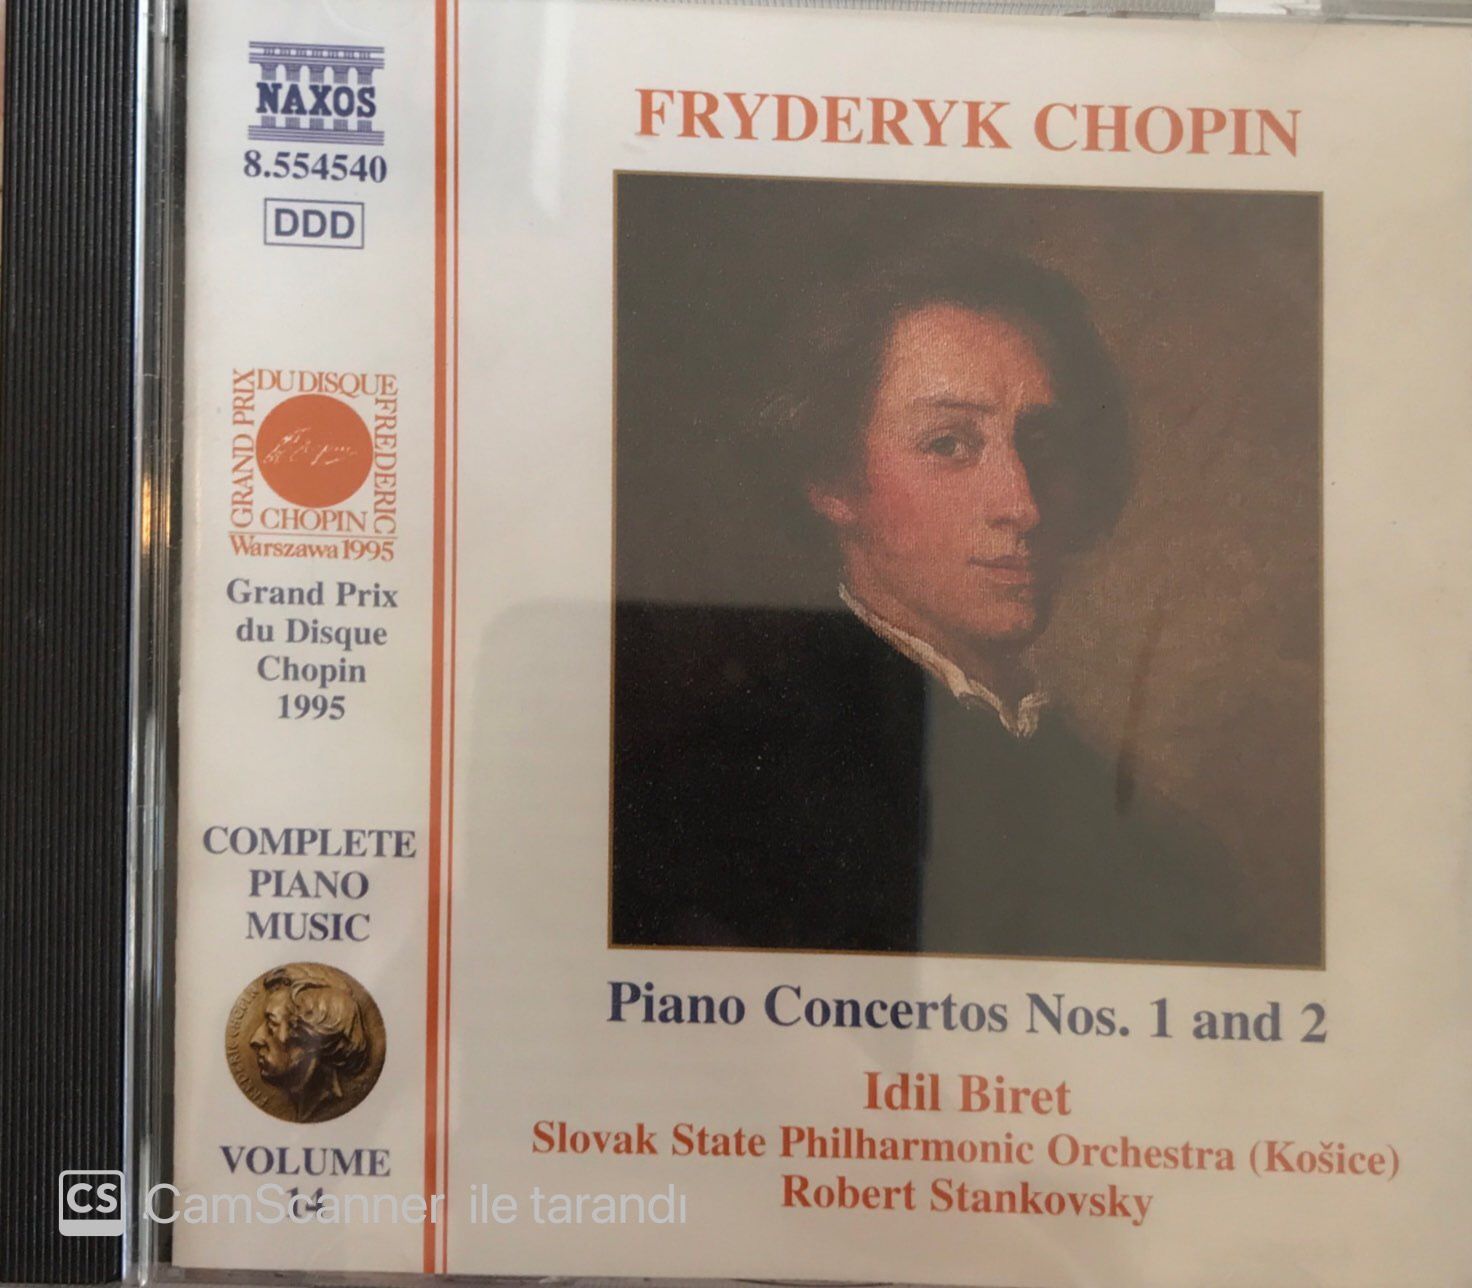 Fryderyk Chopin Piano Concertos Nos. 1 And 2 Idil Biret Volume 14 CD